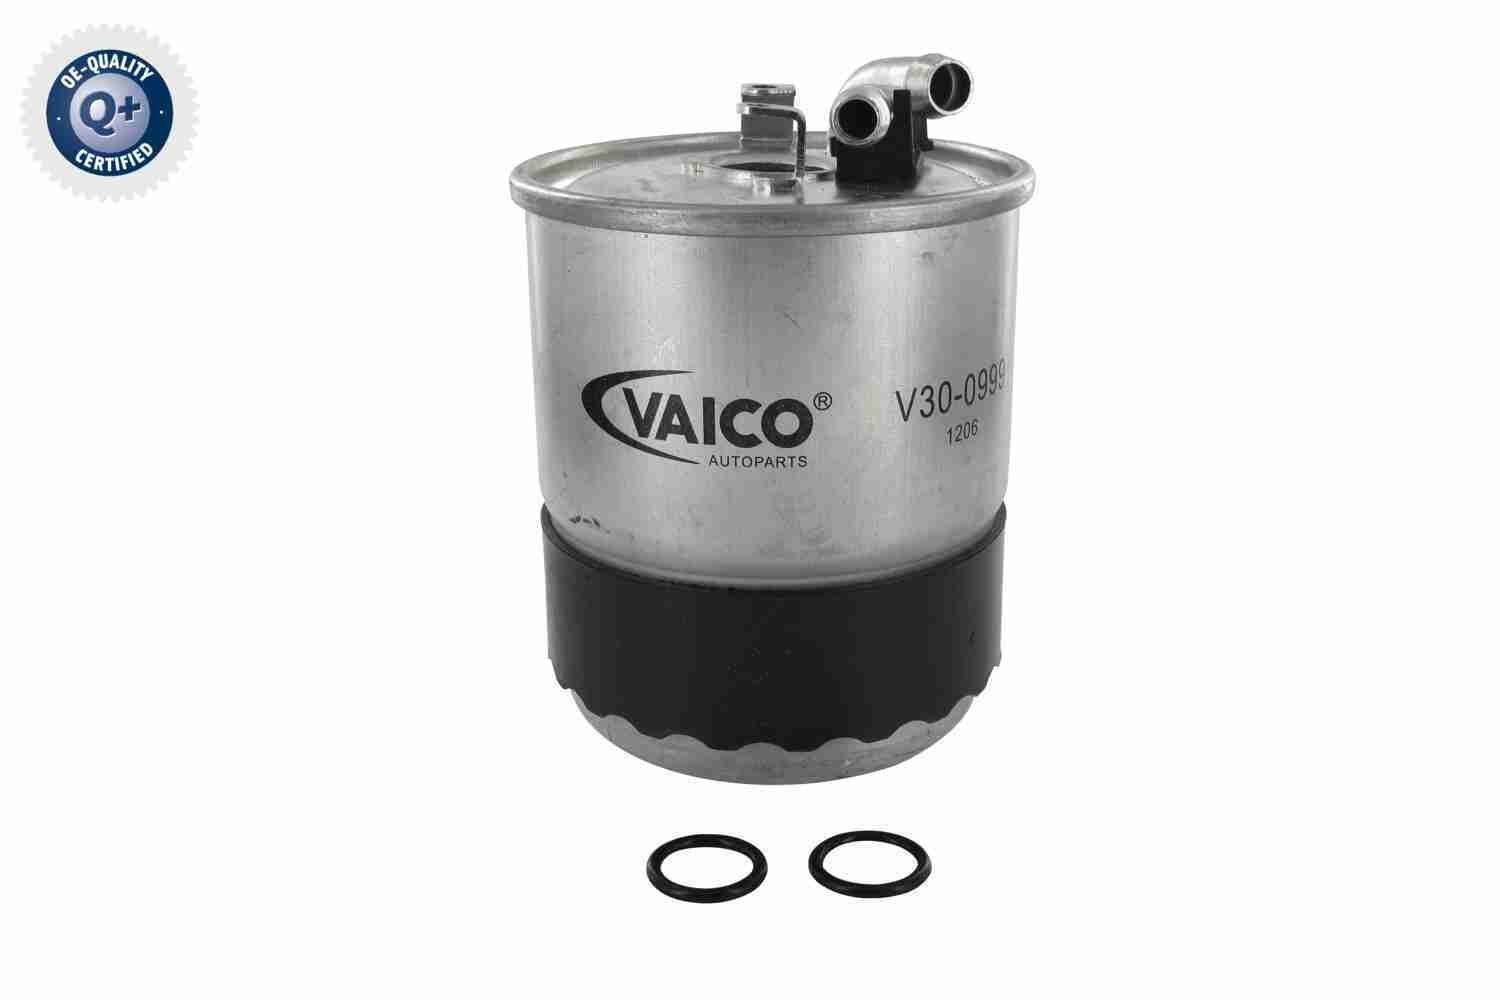 V30-0999 VAICO Fuel filters JEEP Spin-on Filter, 10mm, 8mm, Q+, original equipment manufacturer quality